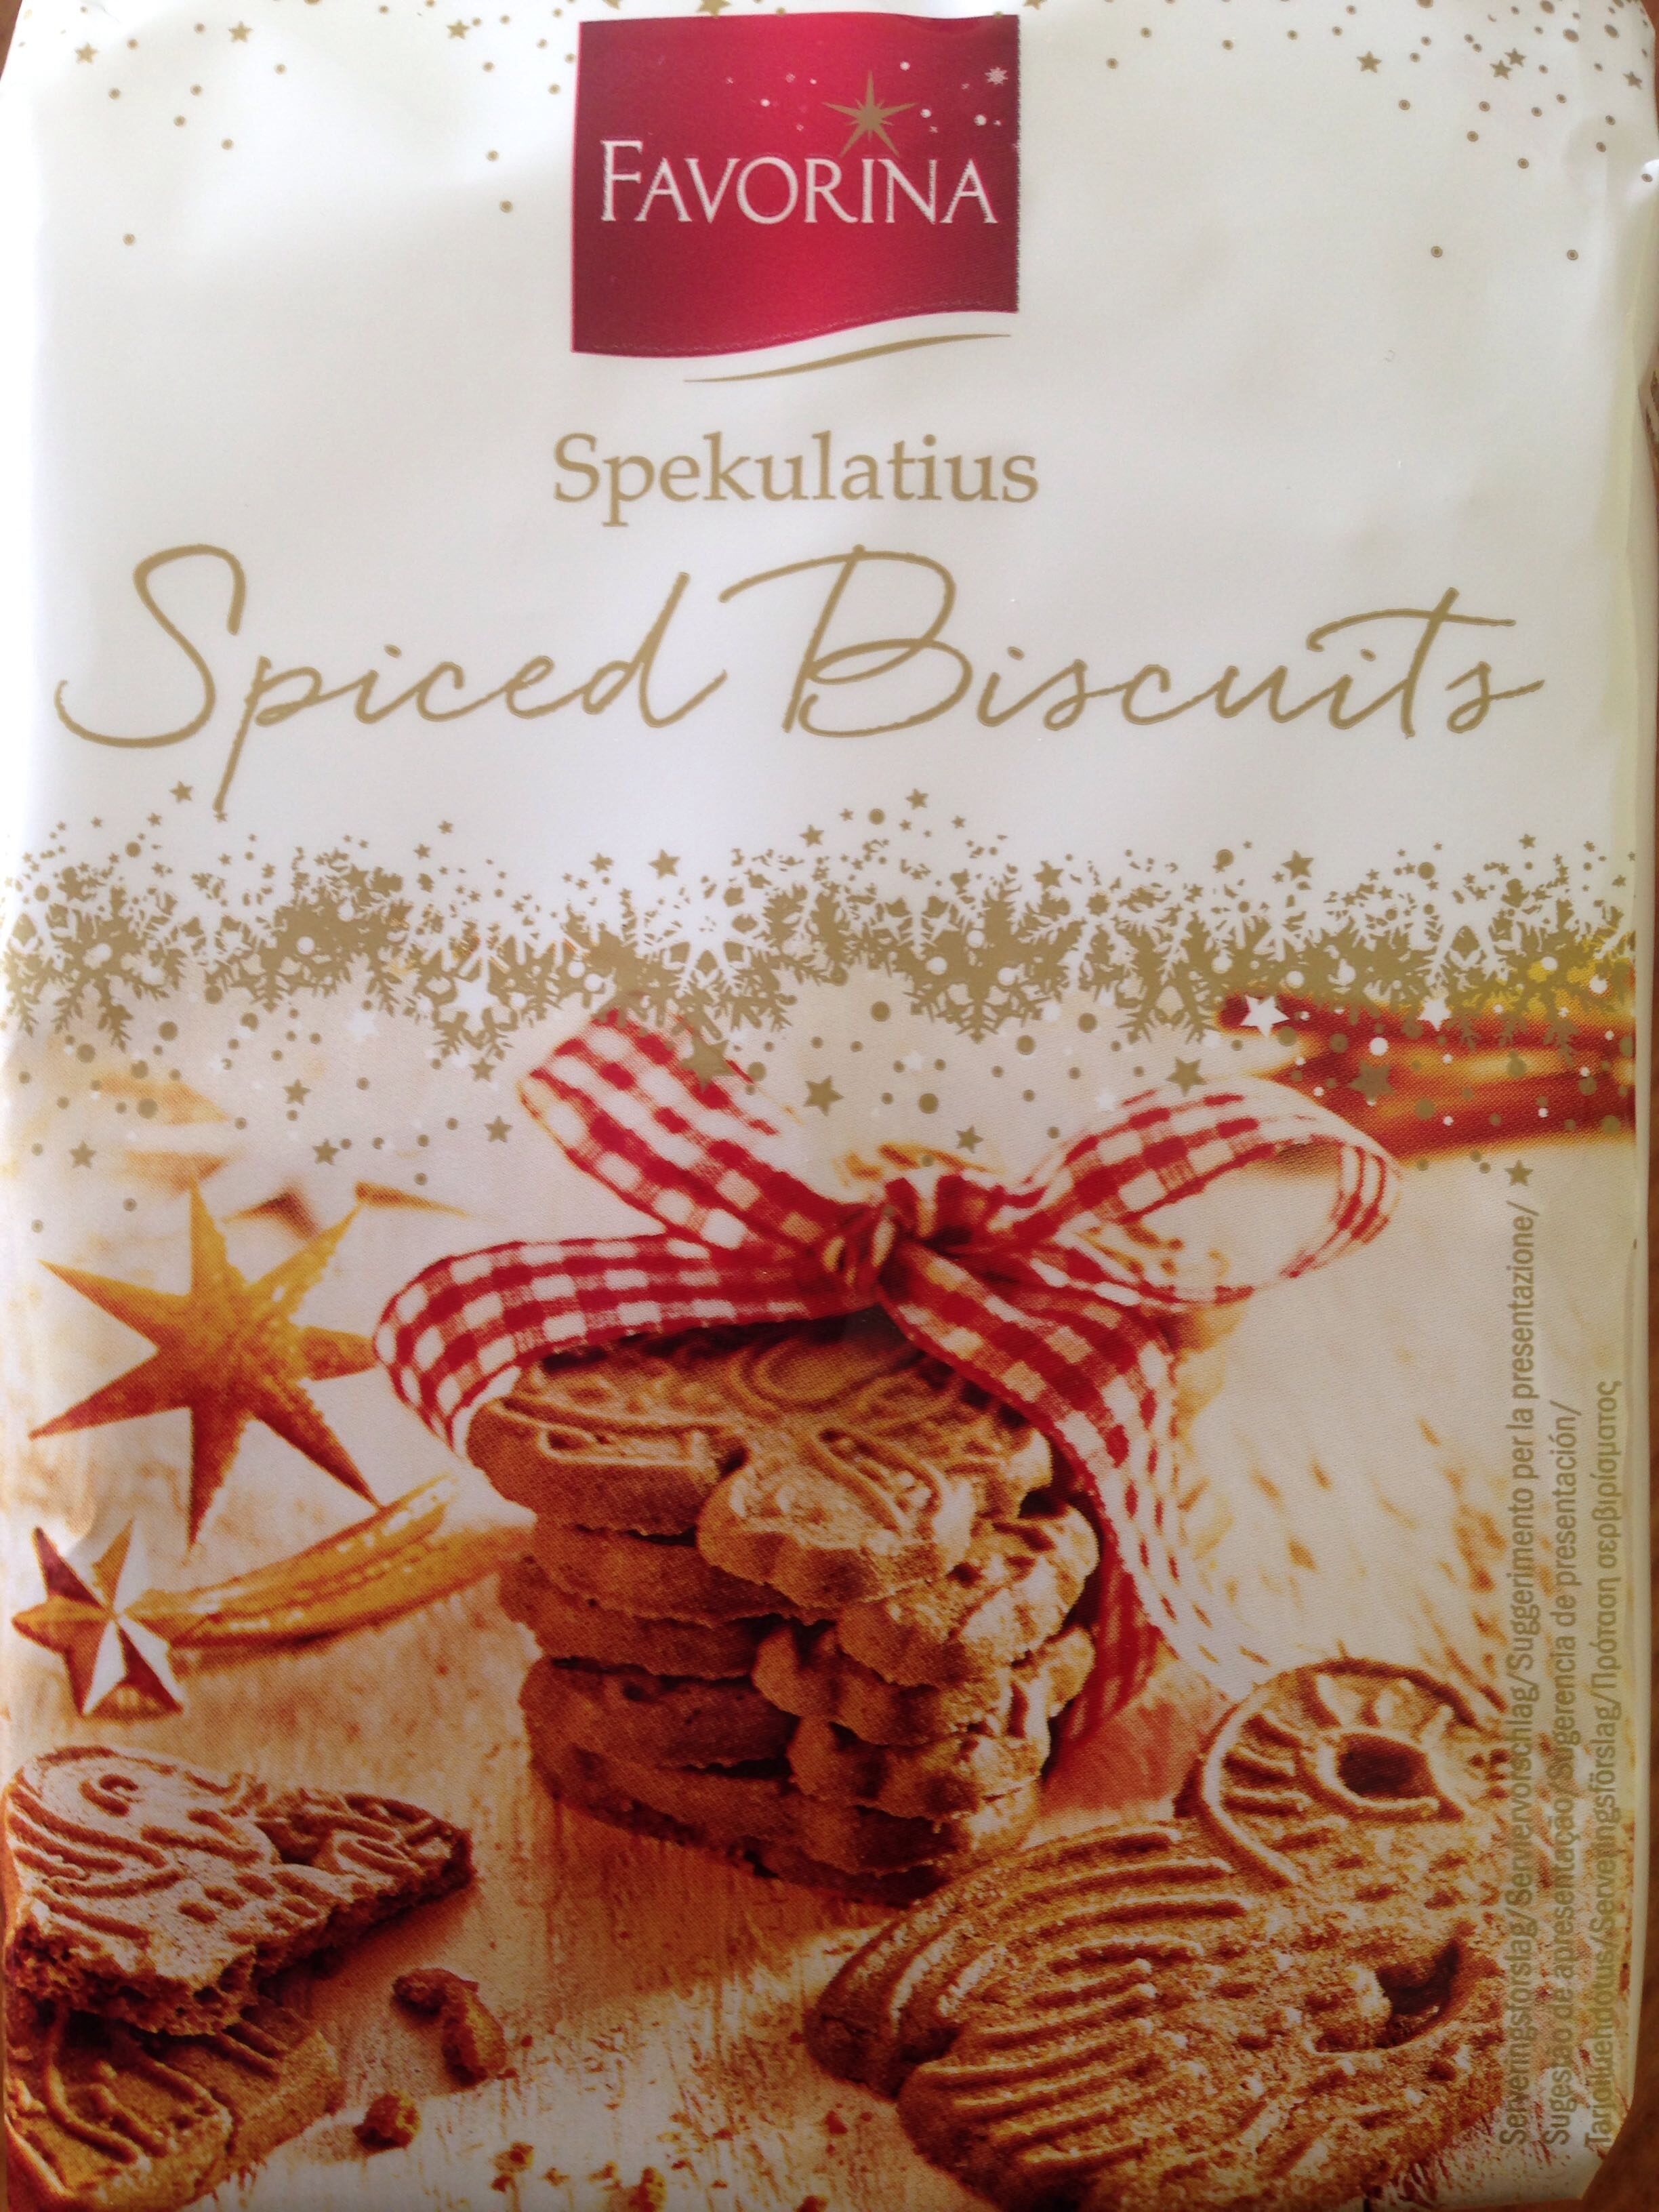 Spiced biscuits - Producte - en